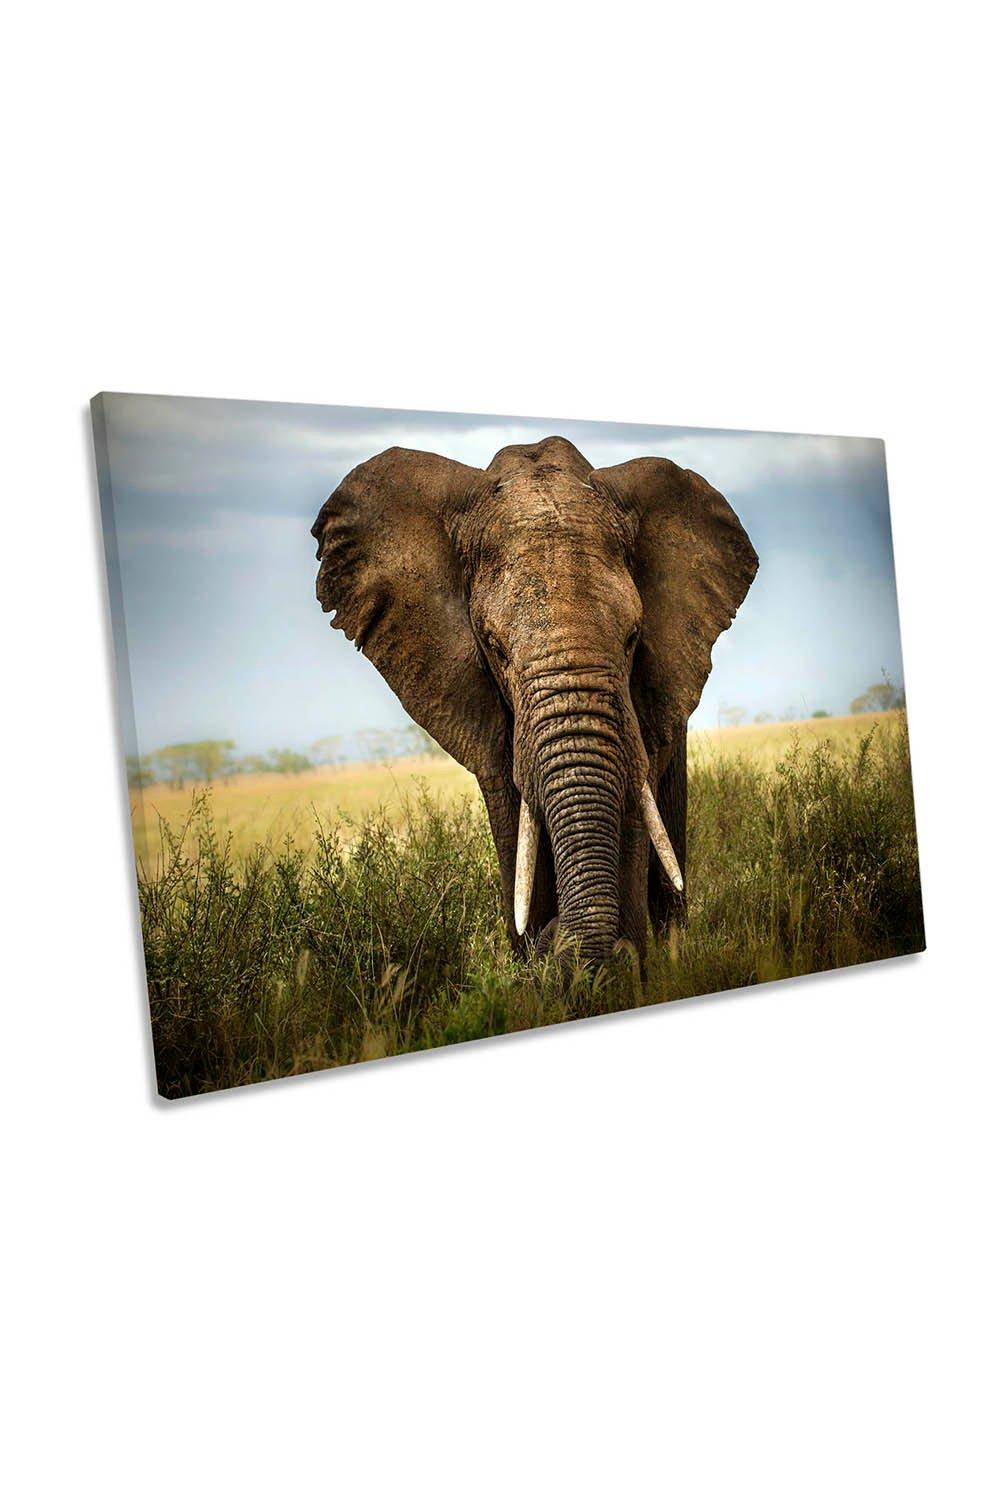 Elephant Encounter Wildlife Canvas Wall Art Picture Print